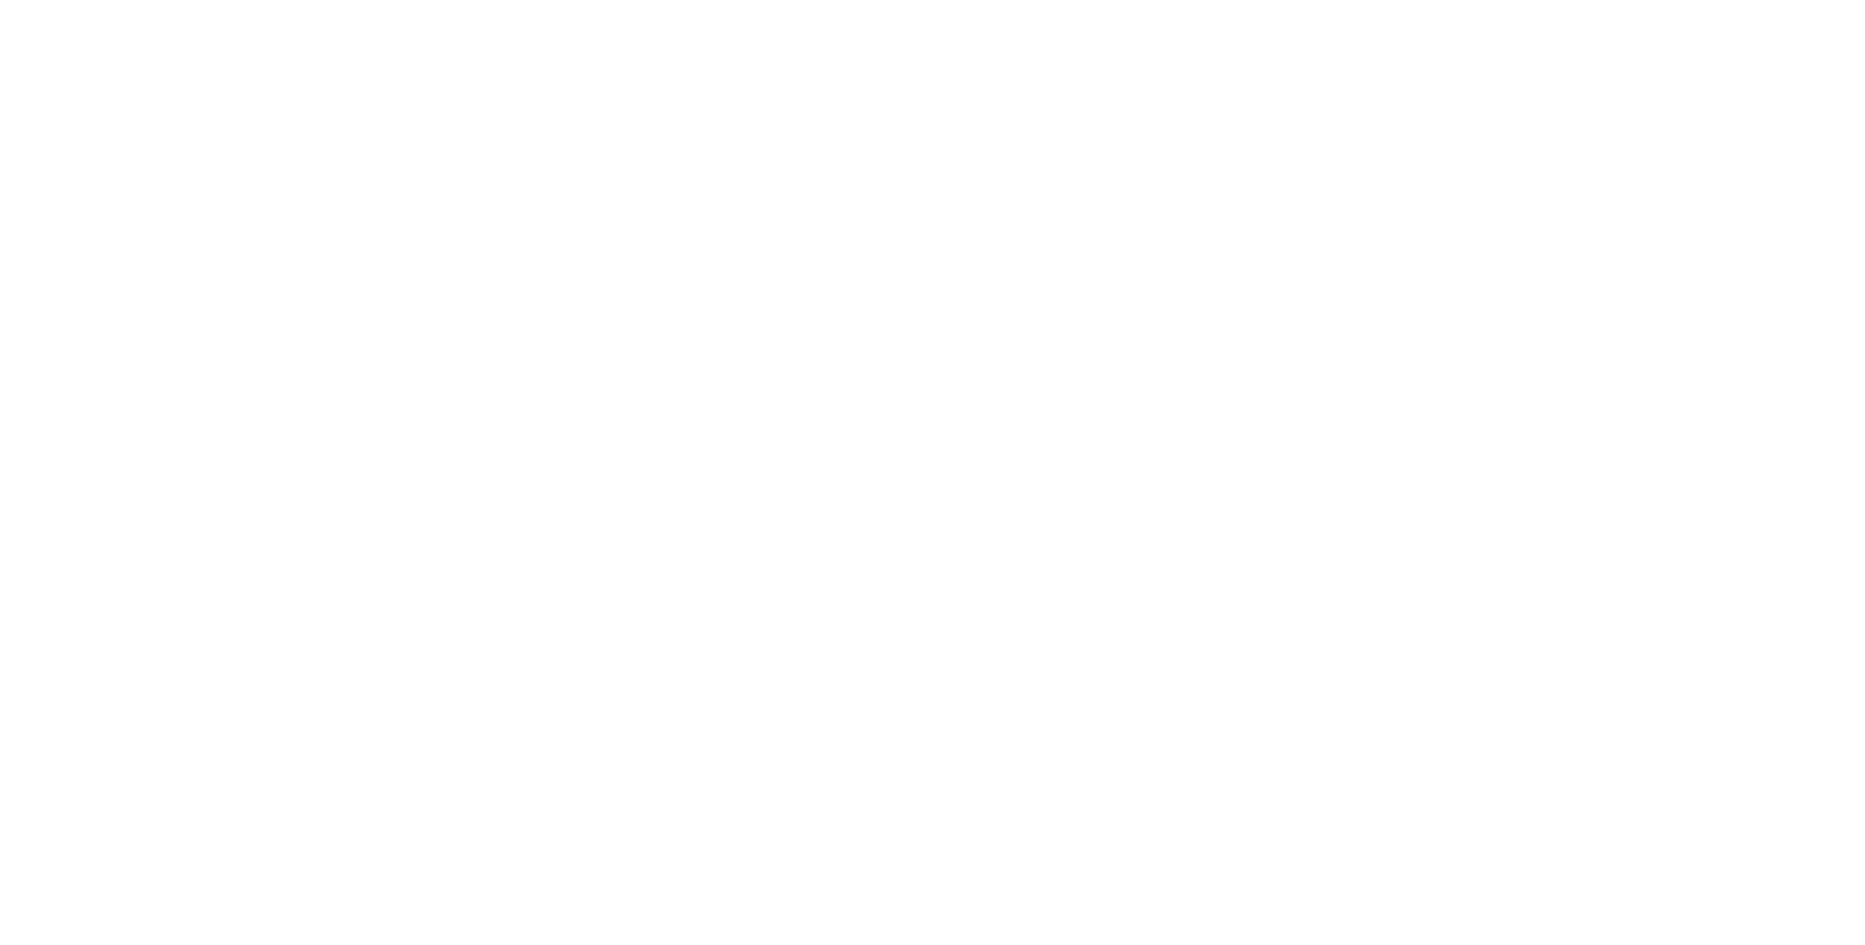 We take responsibility